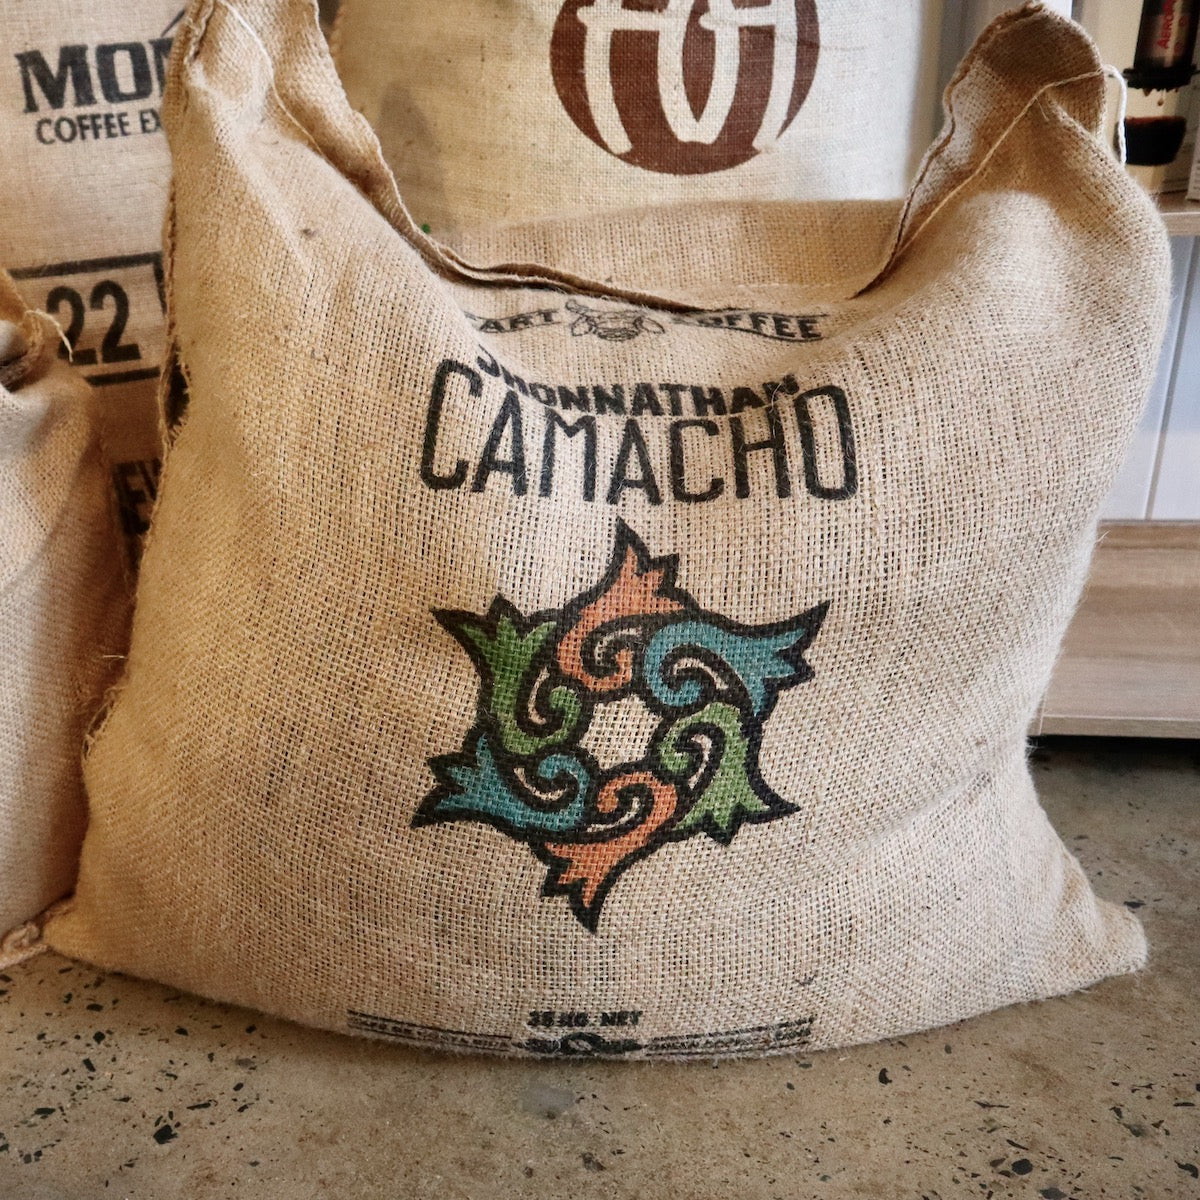 Costa Rica Finca Llano Bonito coffee bean sacks